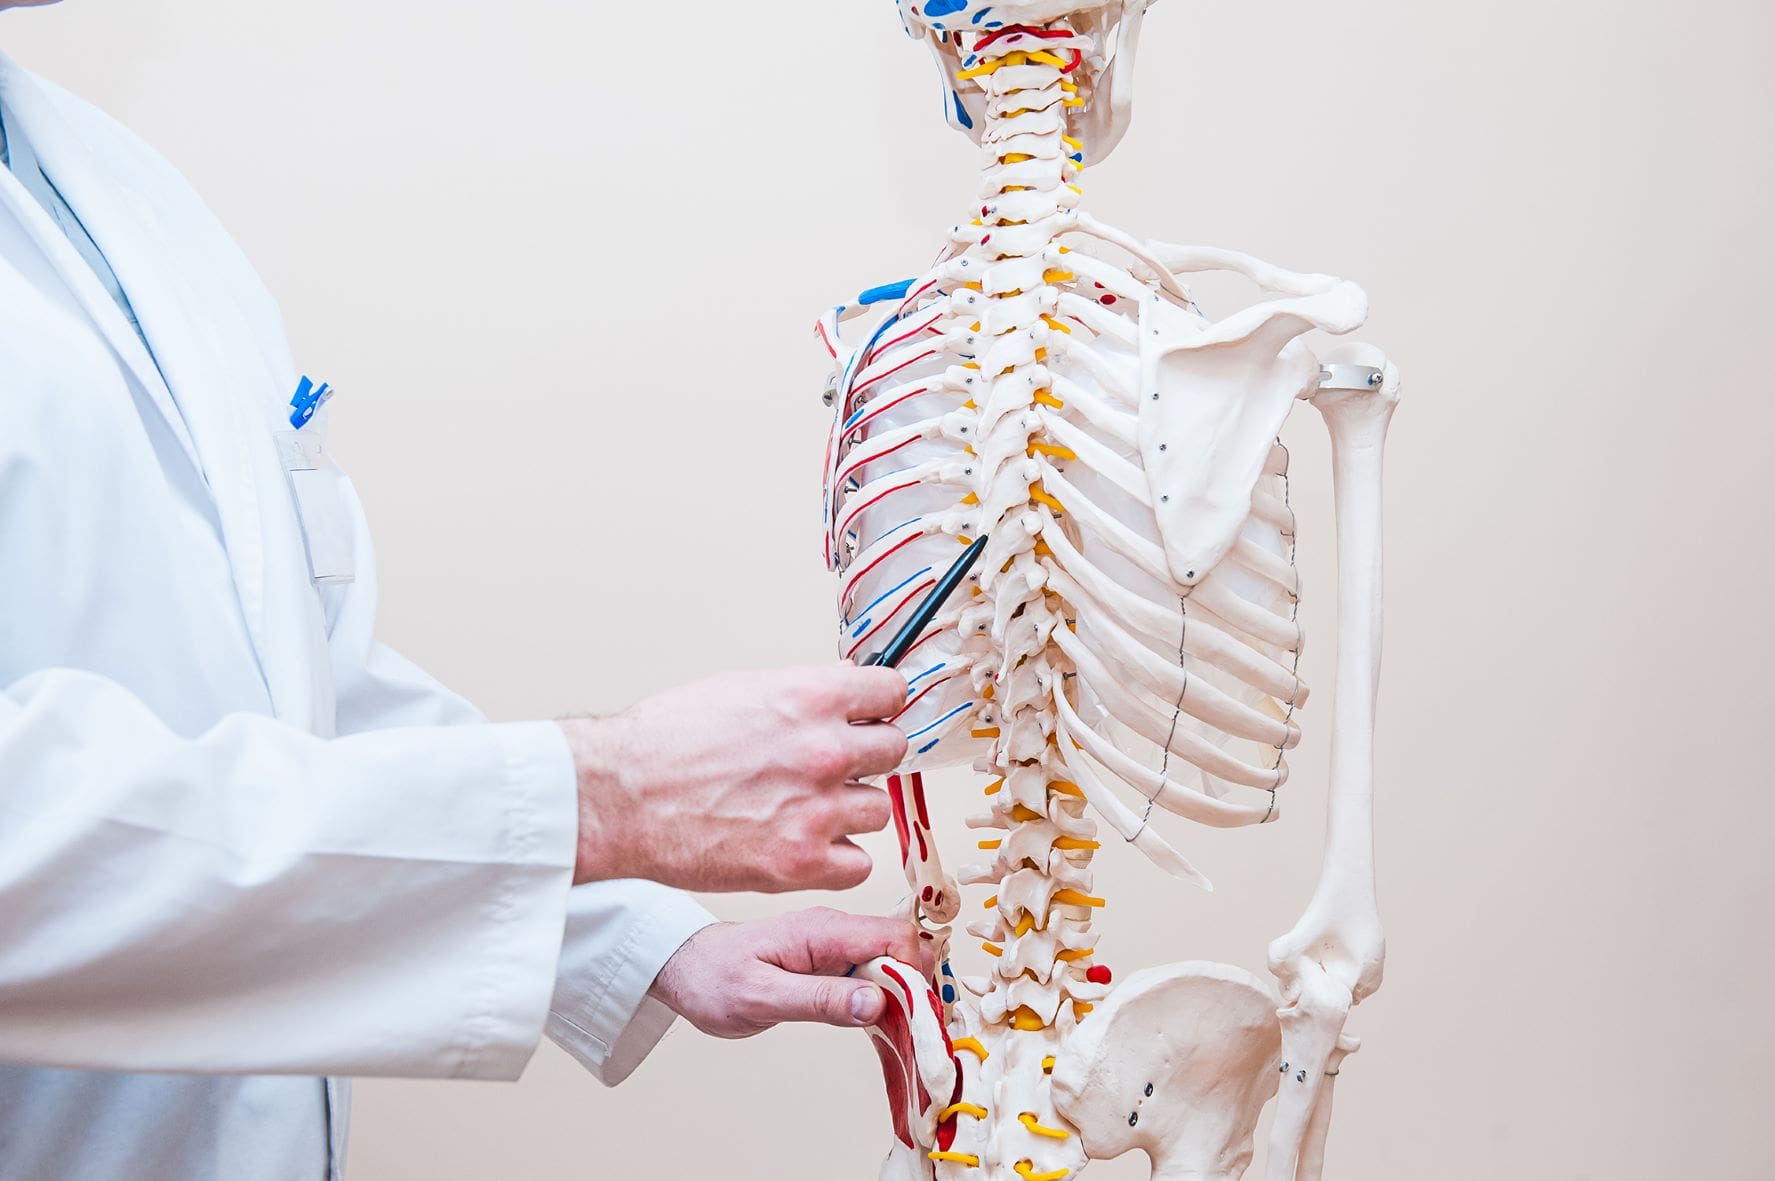 medical doctor man pointing at spinal cord injury areas using human skeleton model